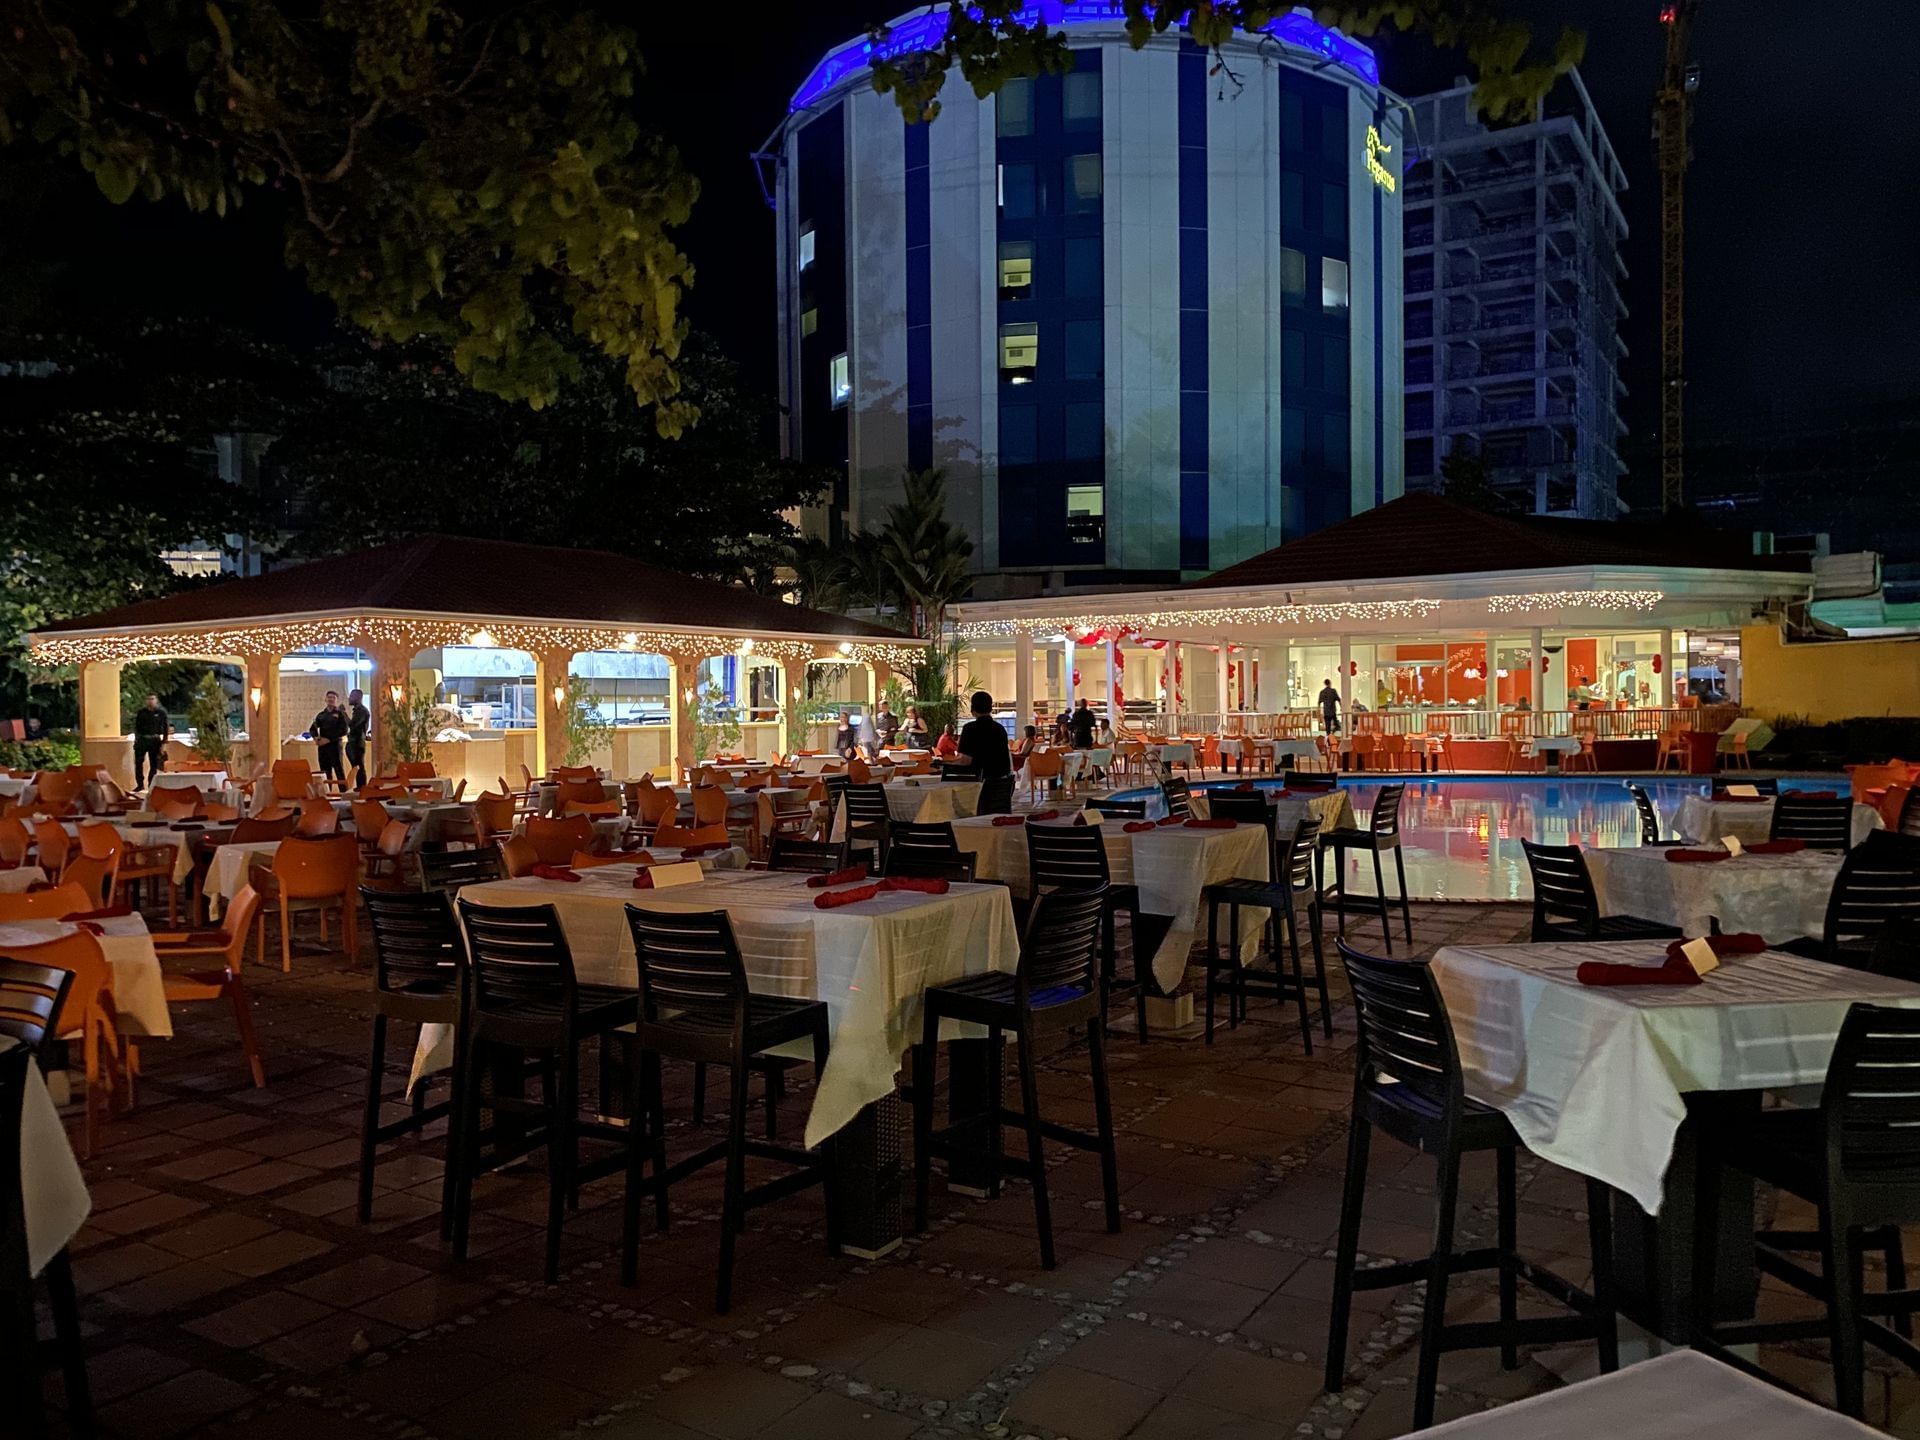 Outdoor dining area arranged at Pegasus Hotel Guyana